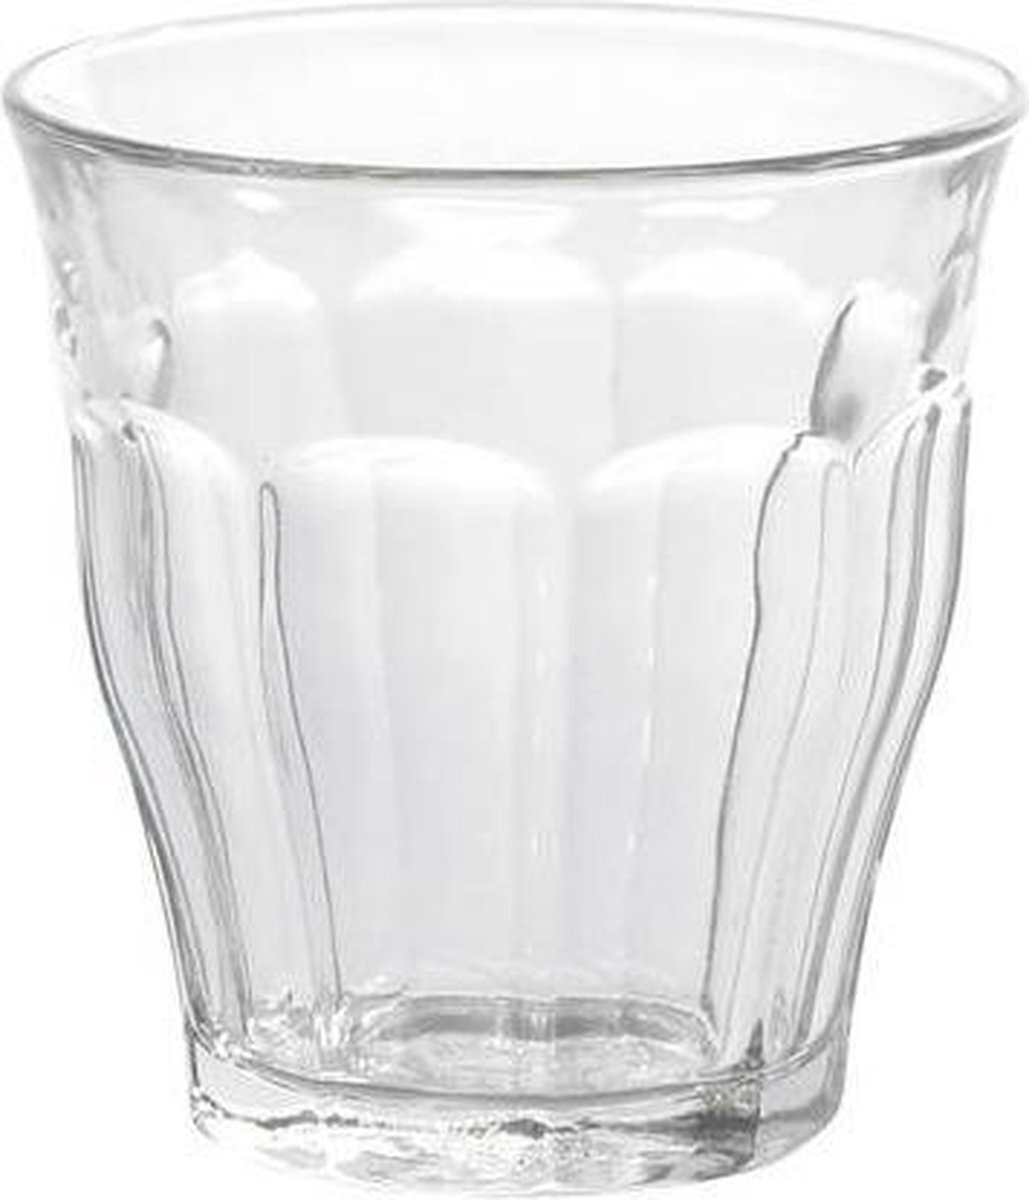 Duralex drinkglas – Picardi – Ø 8,8 cm – 36 cl – 4 stuks